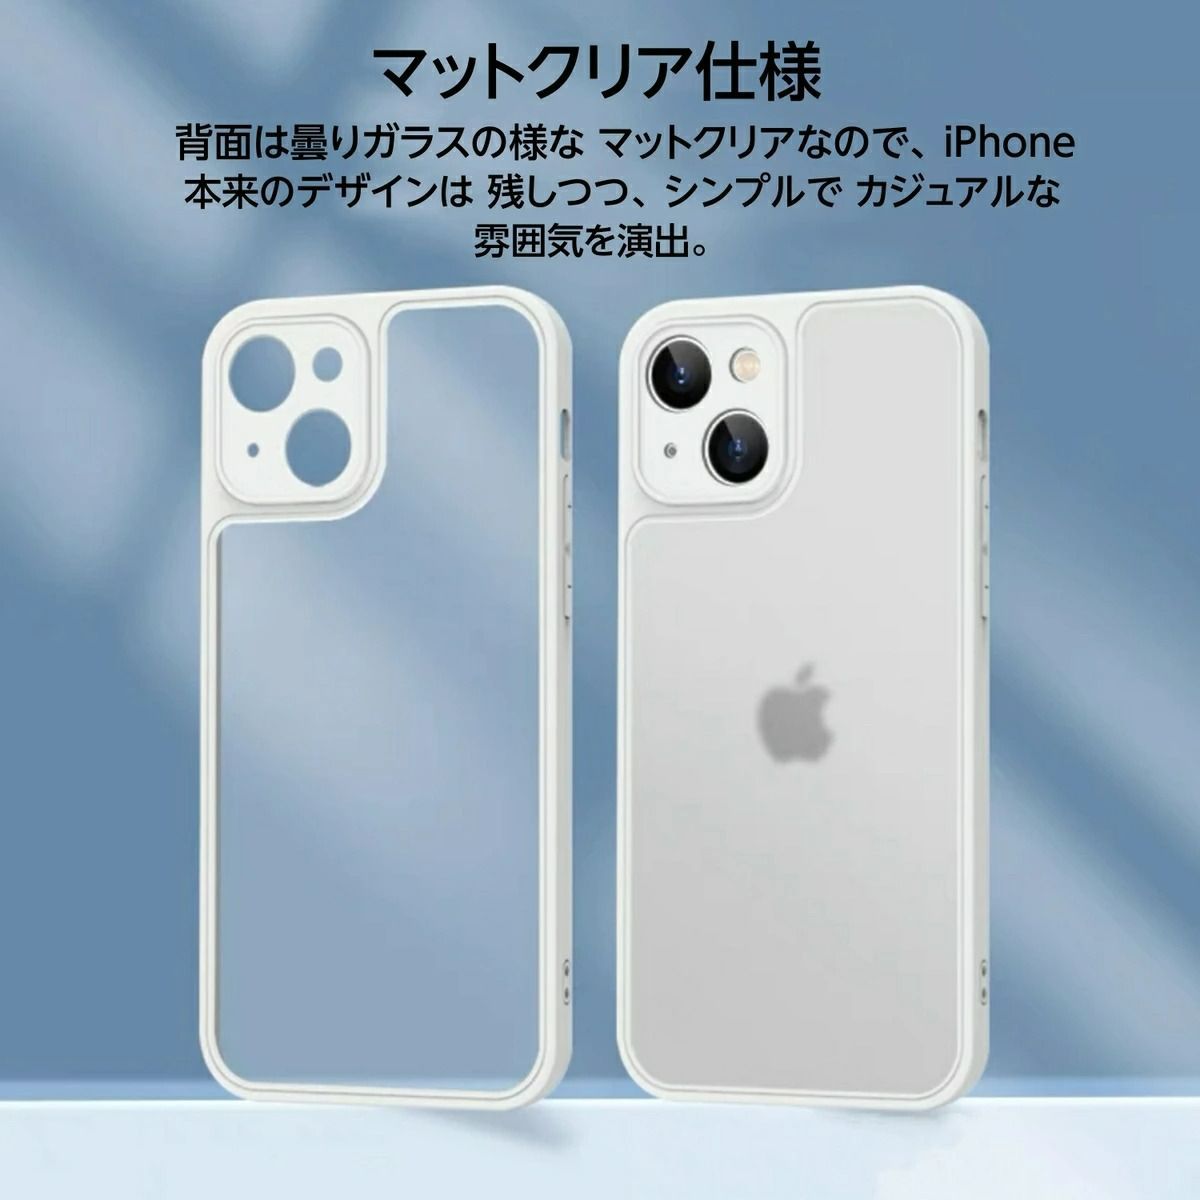 iphone13 iphone12 iphone11 iphoneケース plus pro max スマホケース iphone13pro iphone12 mini 12pro カバー 新型 11pro 韓国かわいい 透明 カメラ保護 指紋防止-7